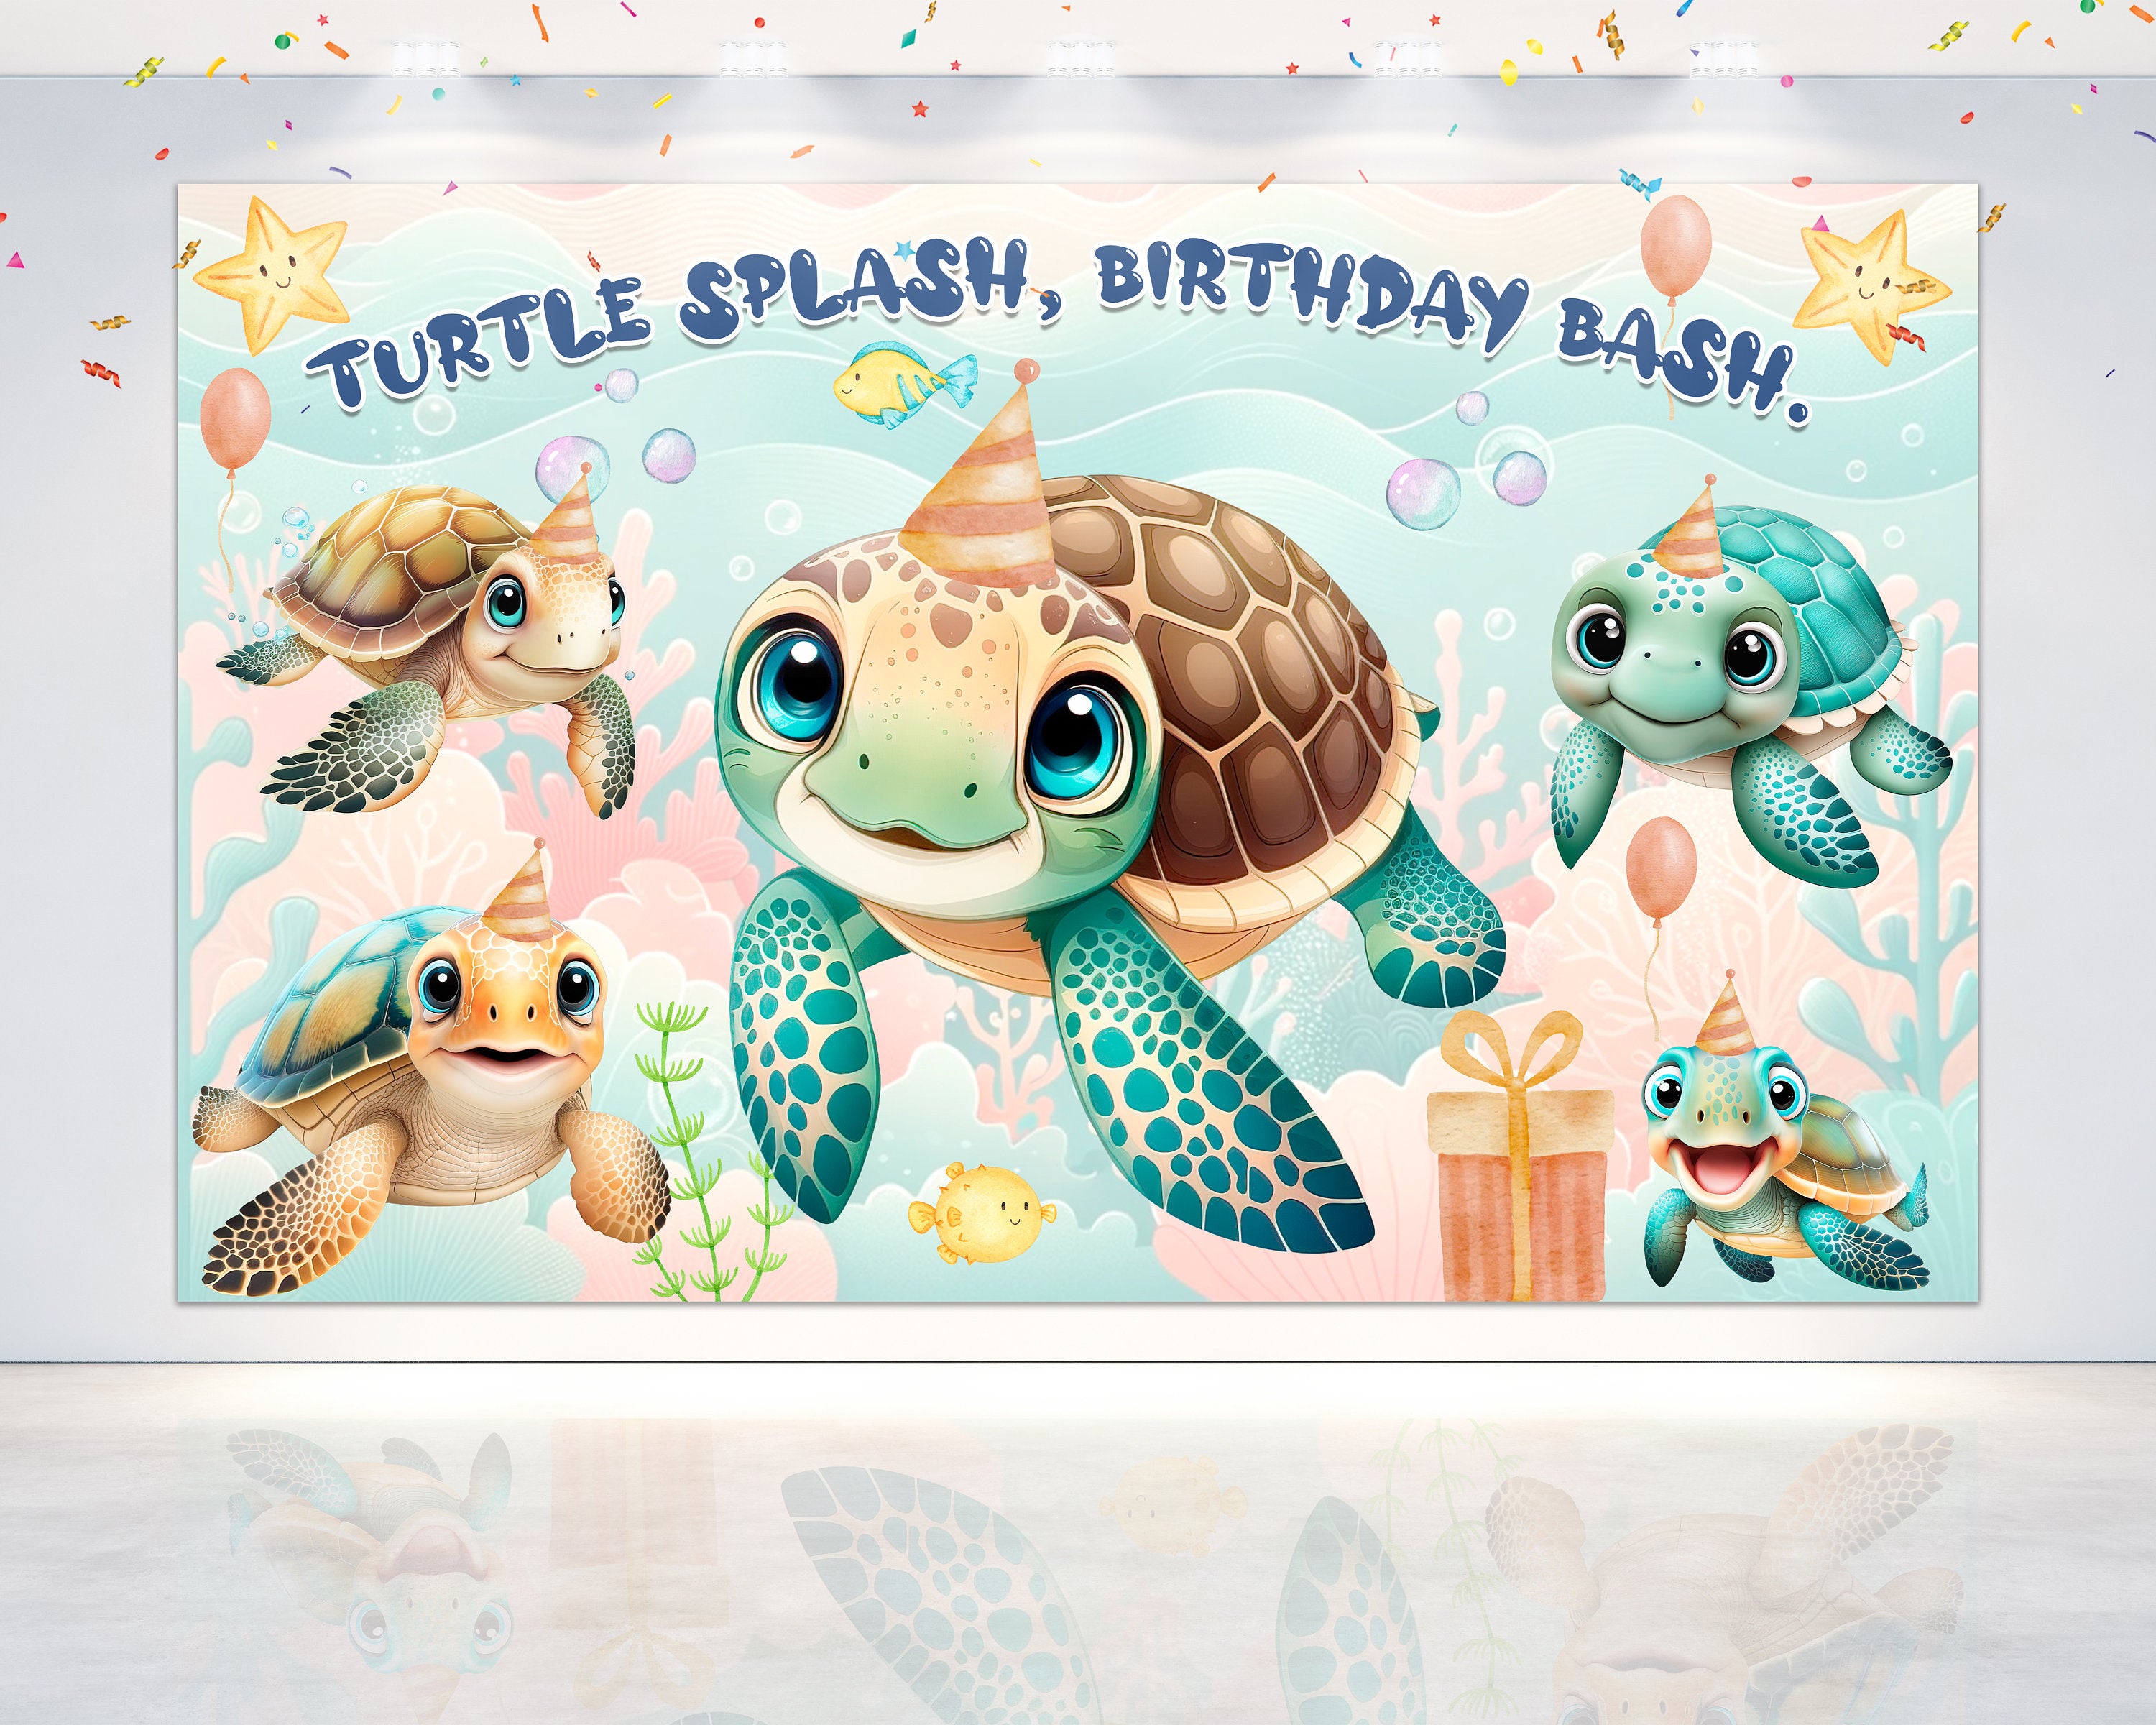 "Turtle Splash, Birthday Bash!" Backdrop